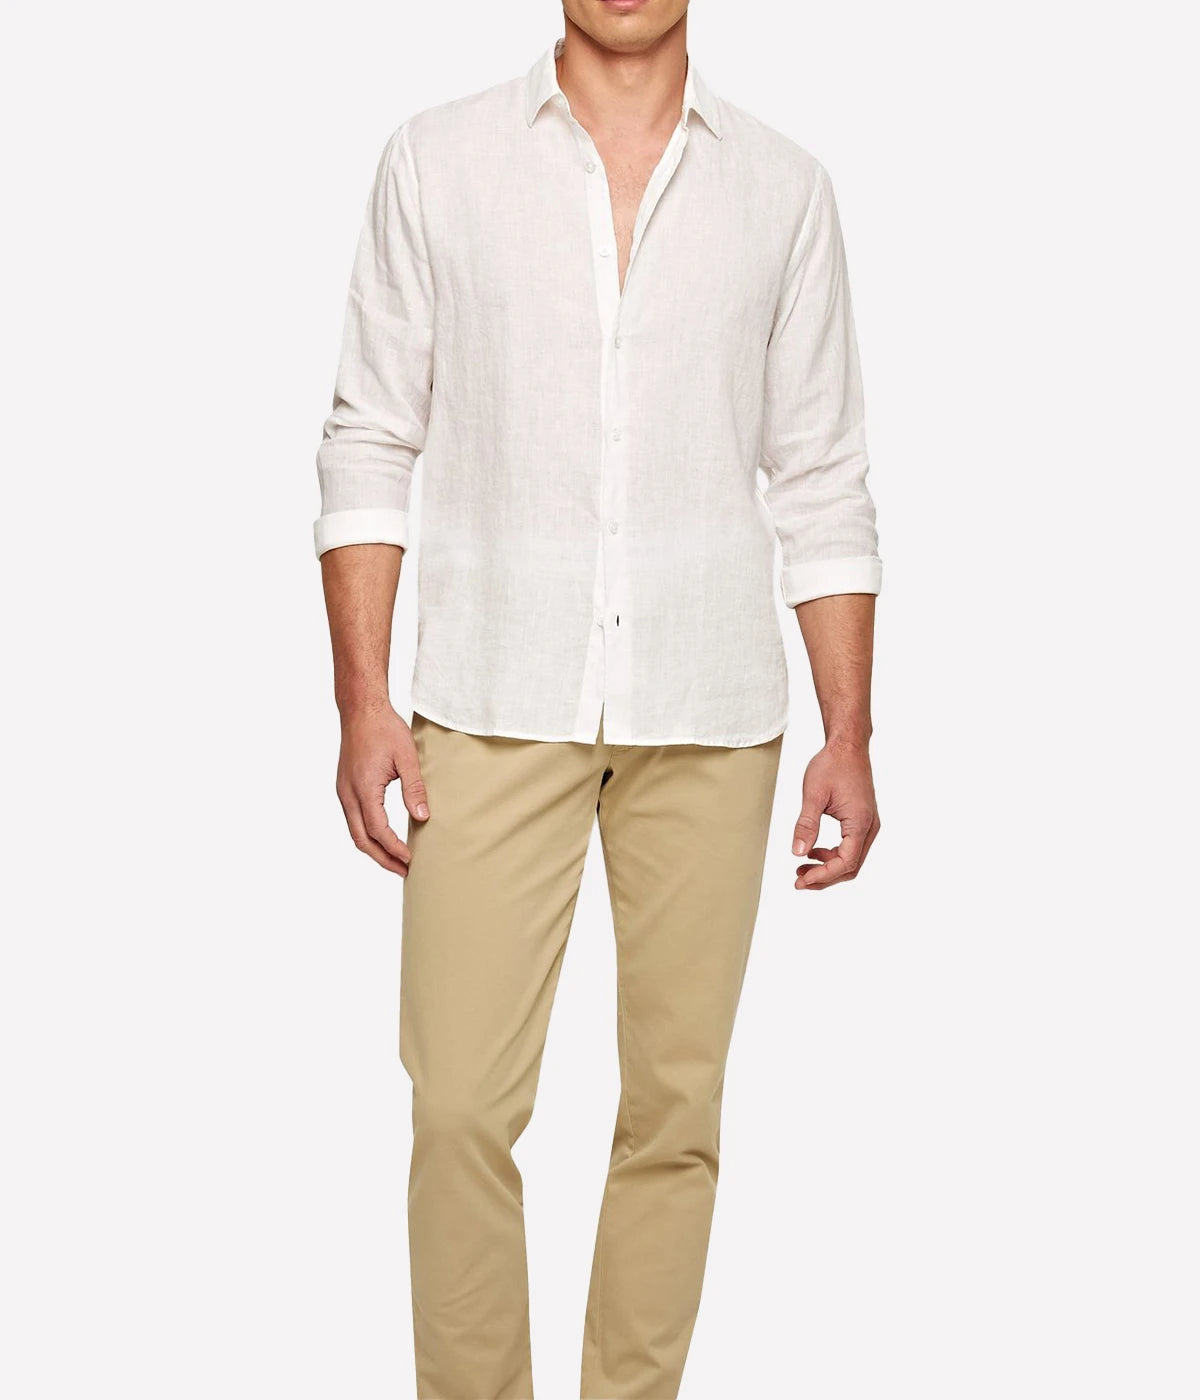 Giles Linen Shirt in White